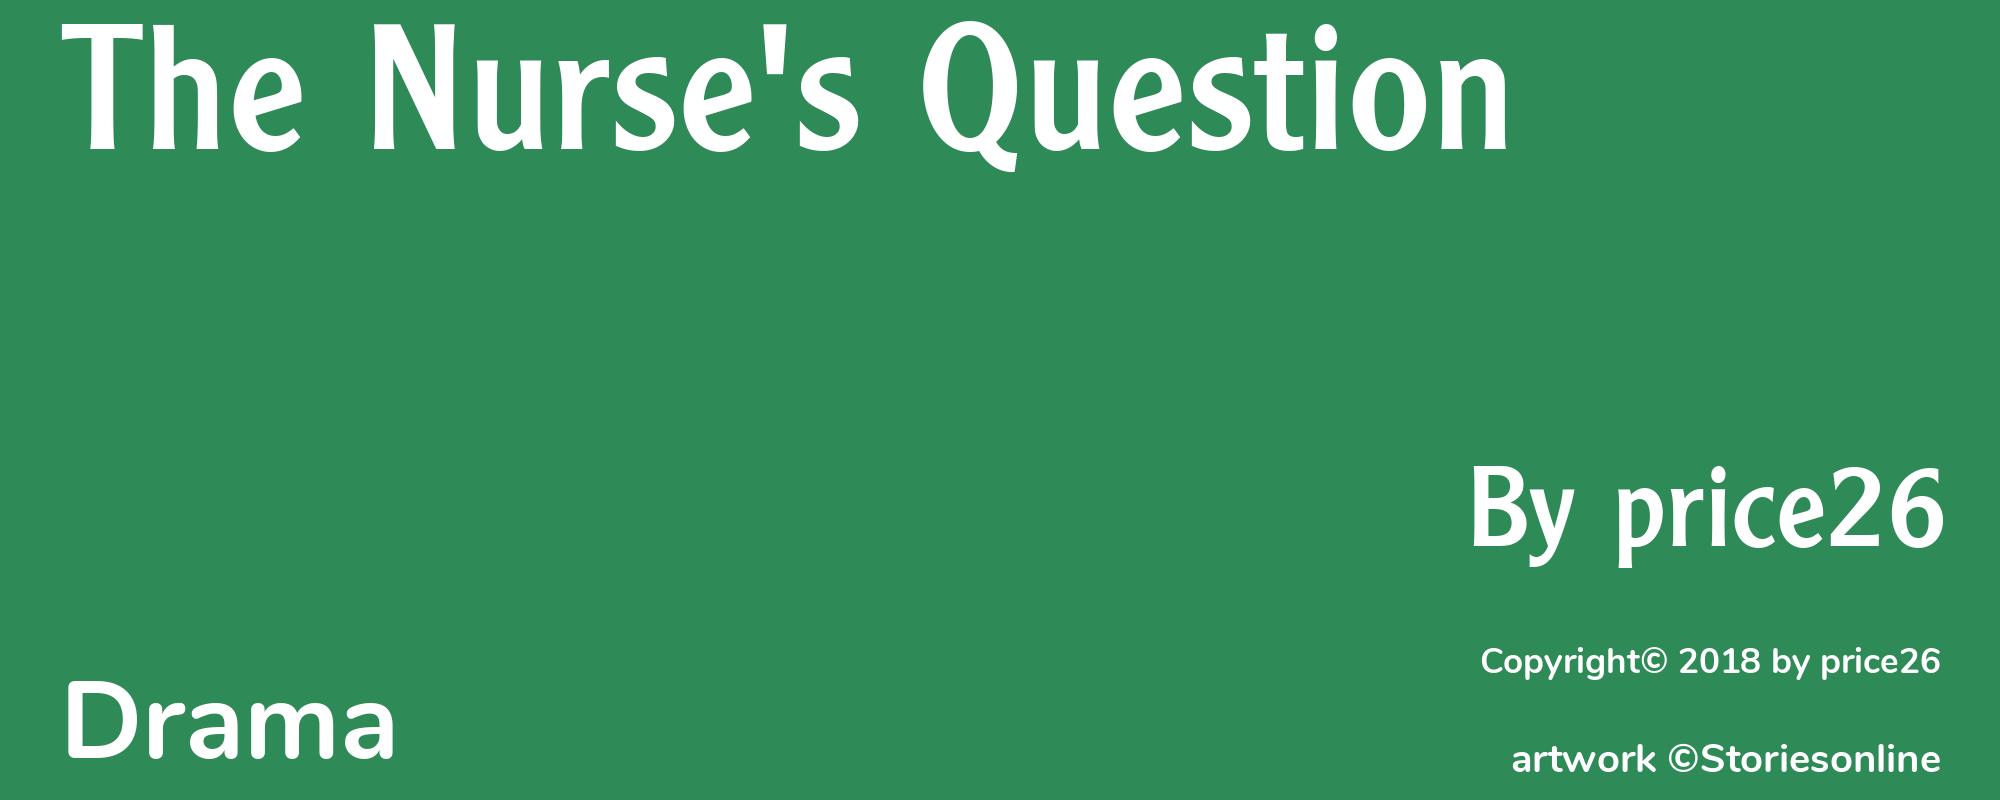 The Nurse's Question - Cover